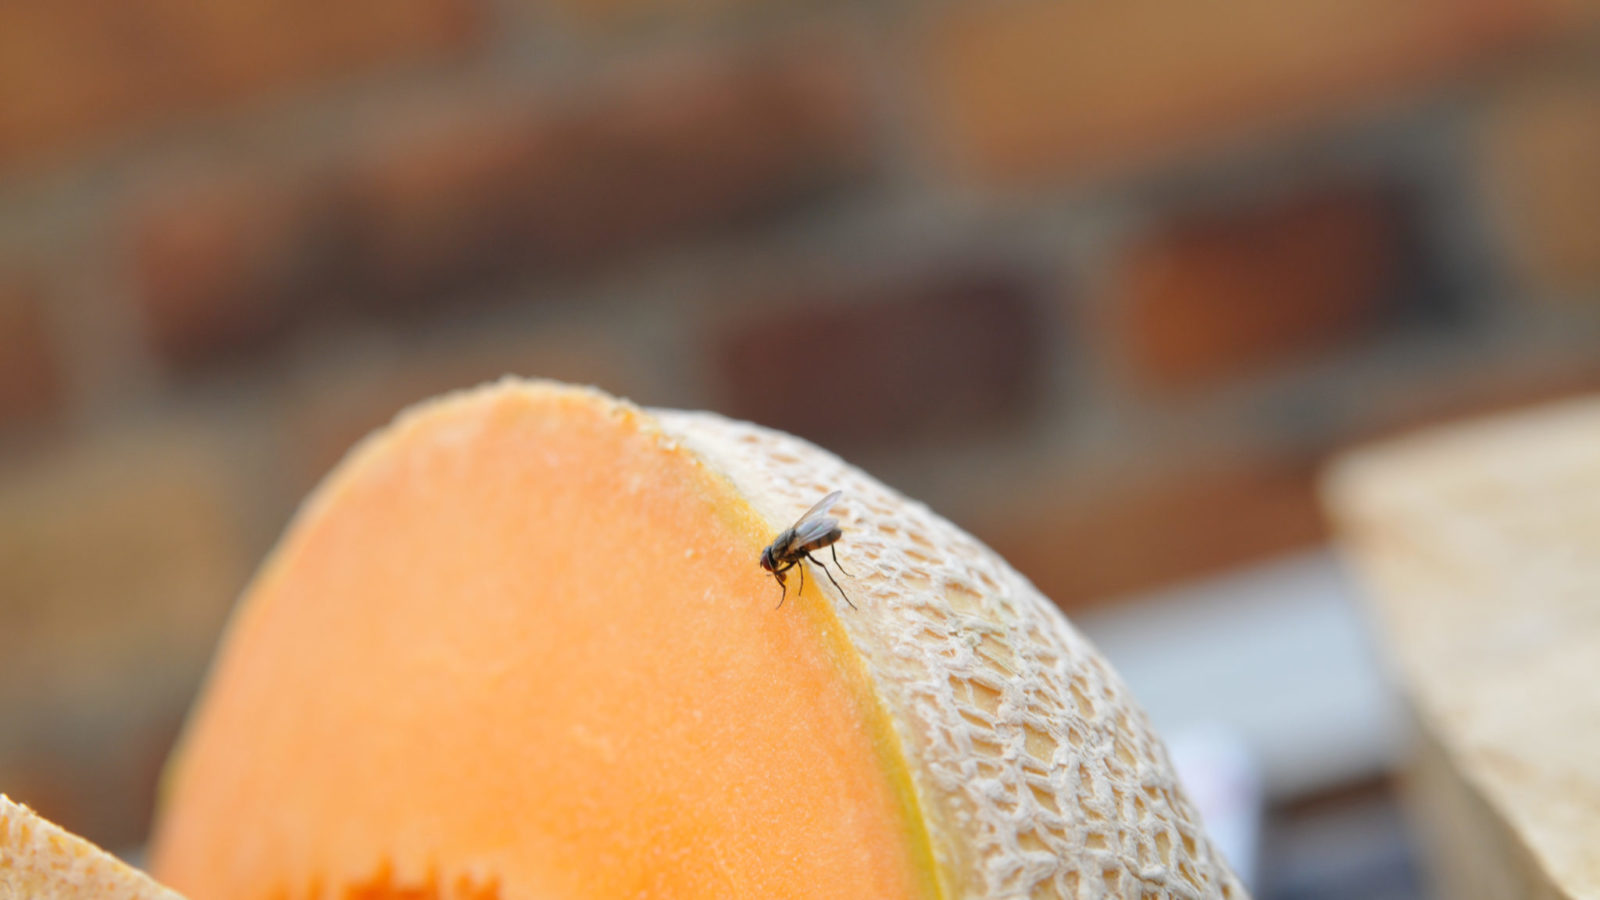 Fruit fly on a cantaloupe melon